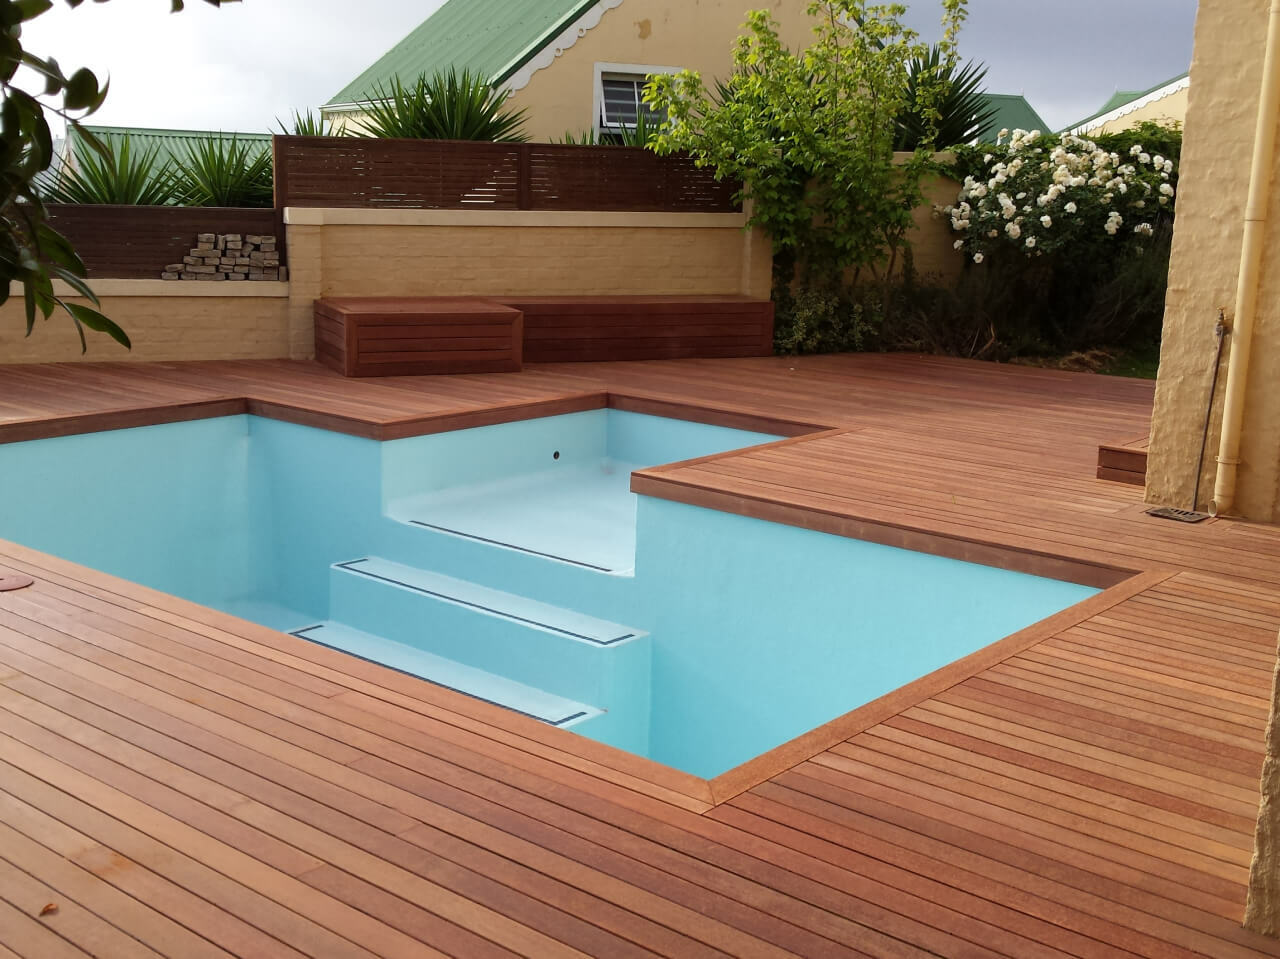 Deck around pool - Timber